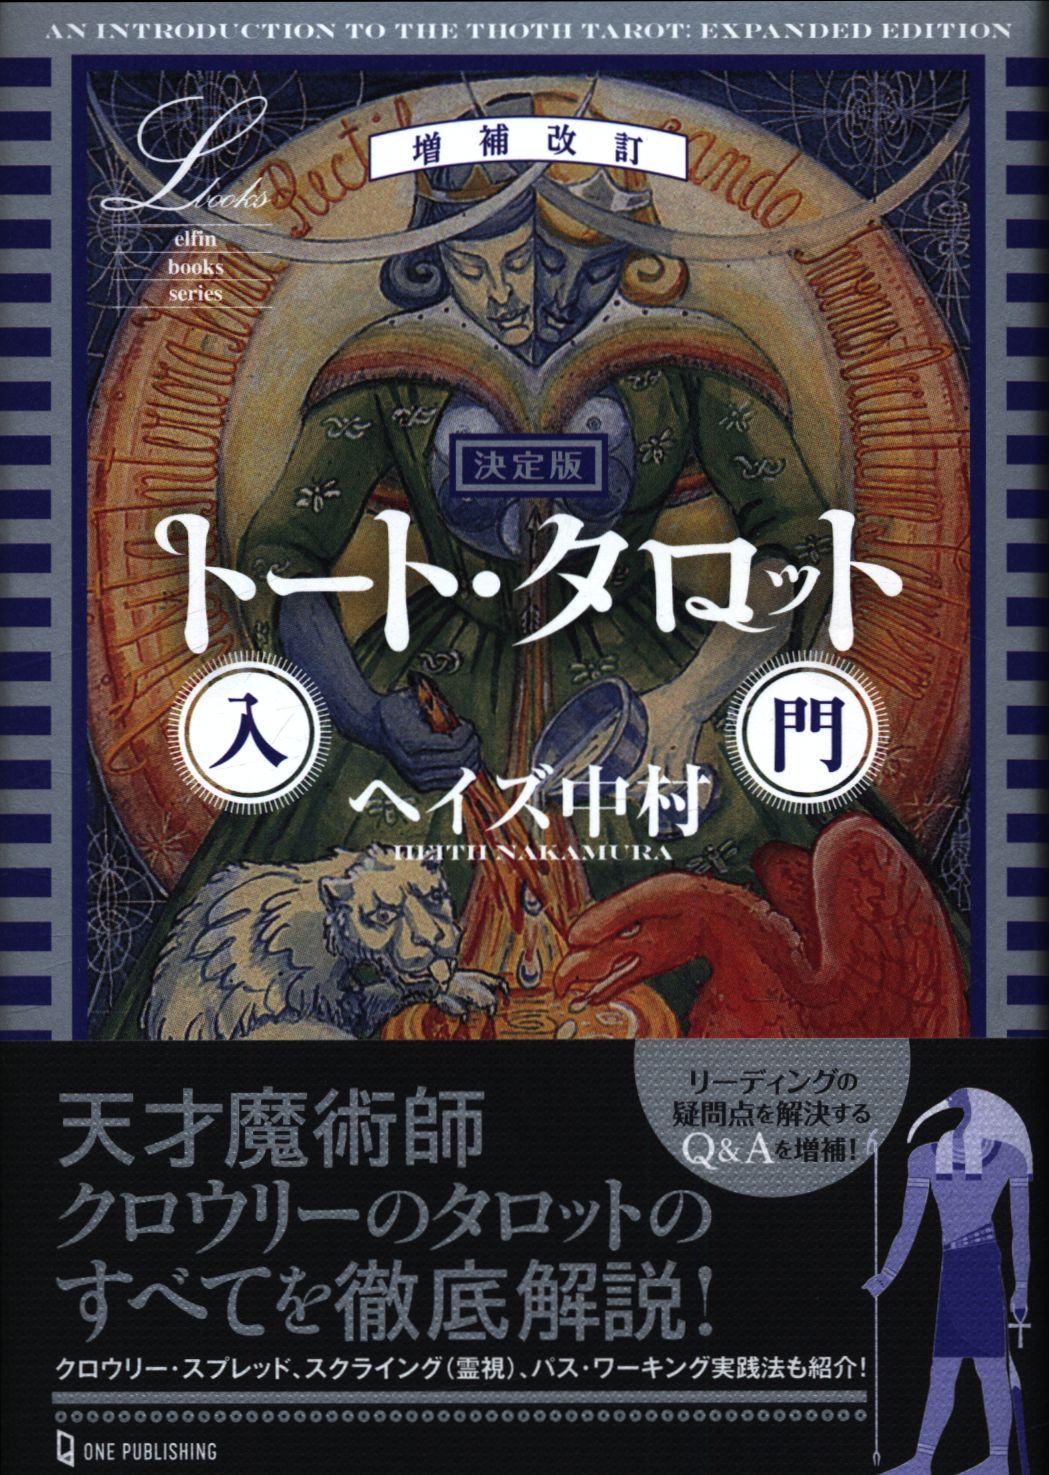 L books/elfin books series ヘイズ中村 決定版 トート・タロット入門 ...